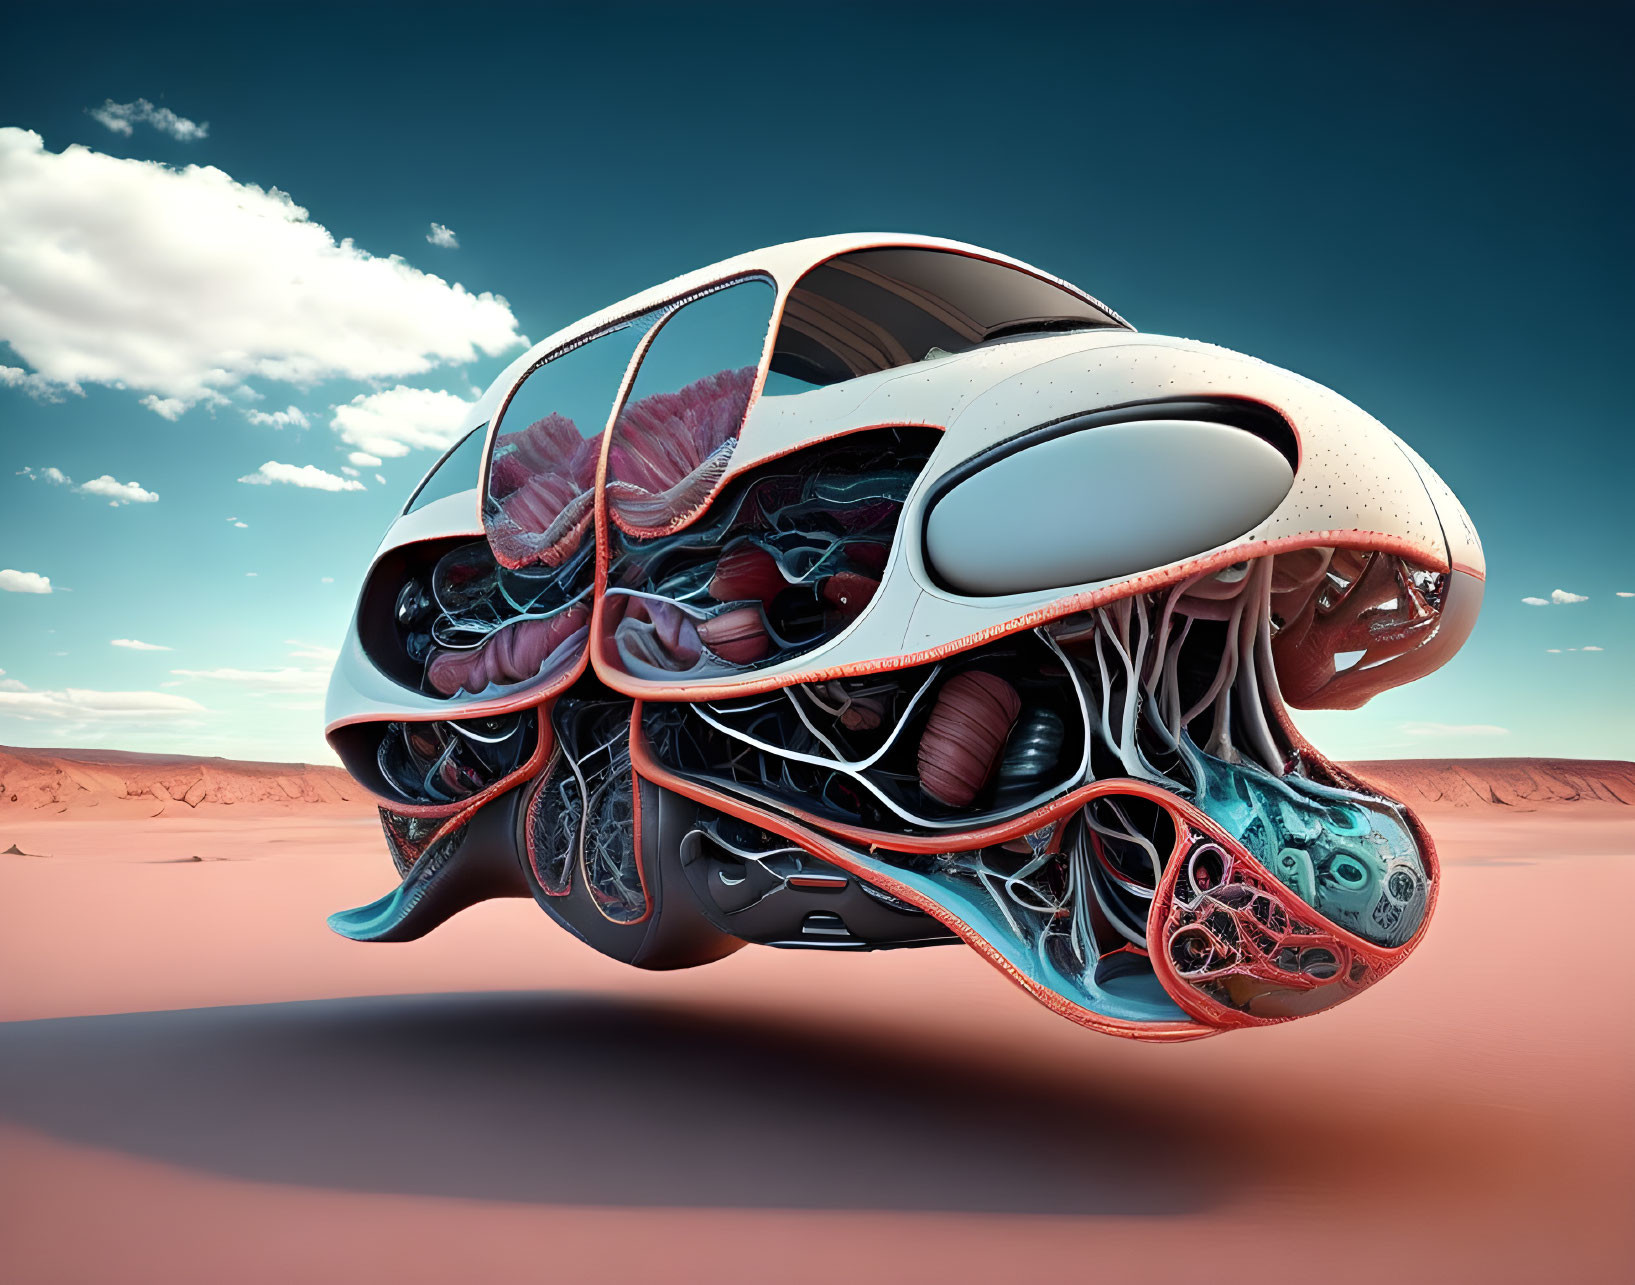 Organic-looking futuristic vehicle in desert landscape